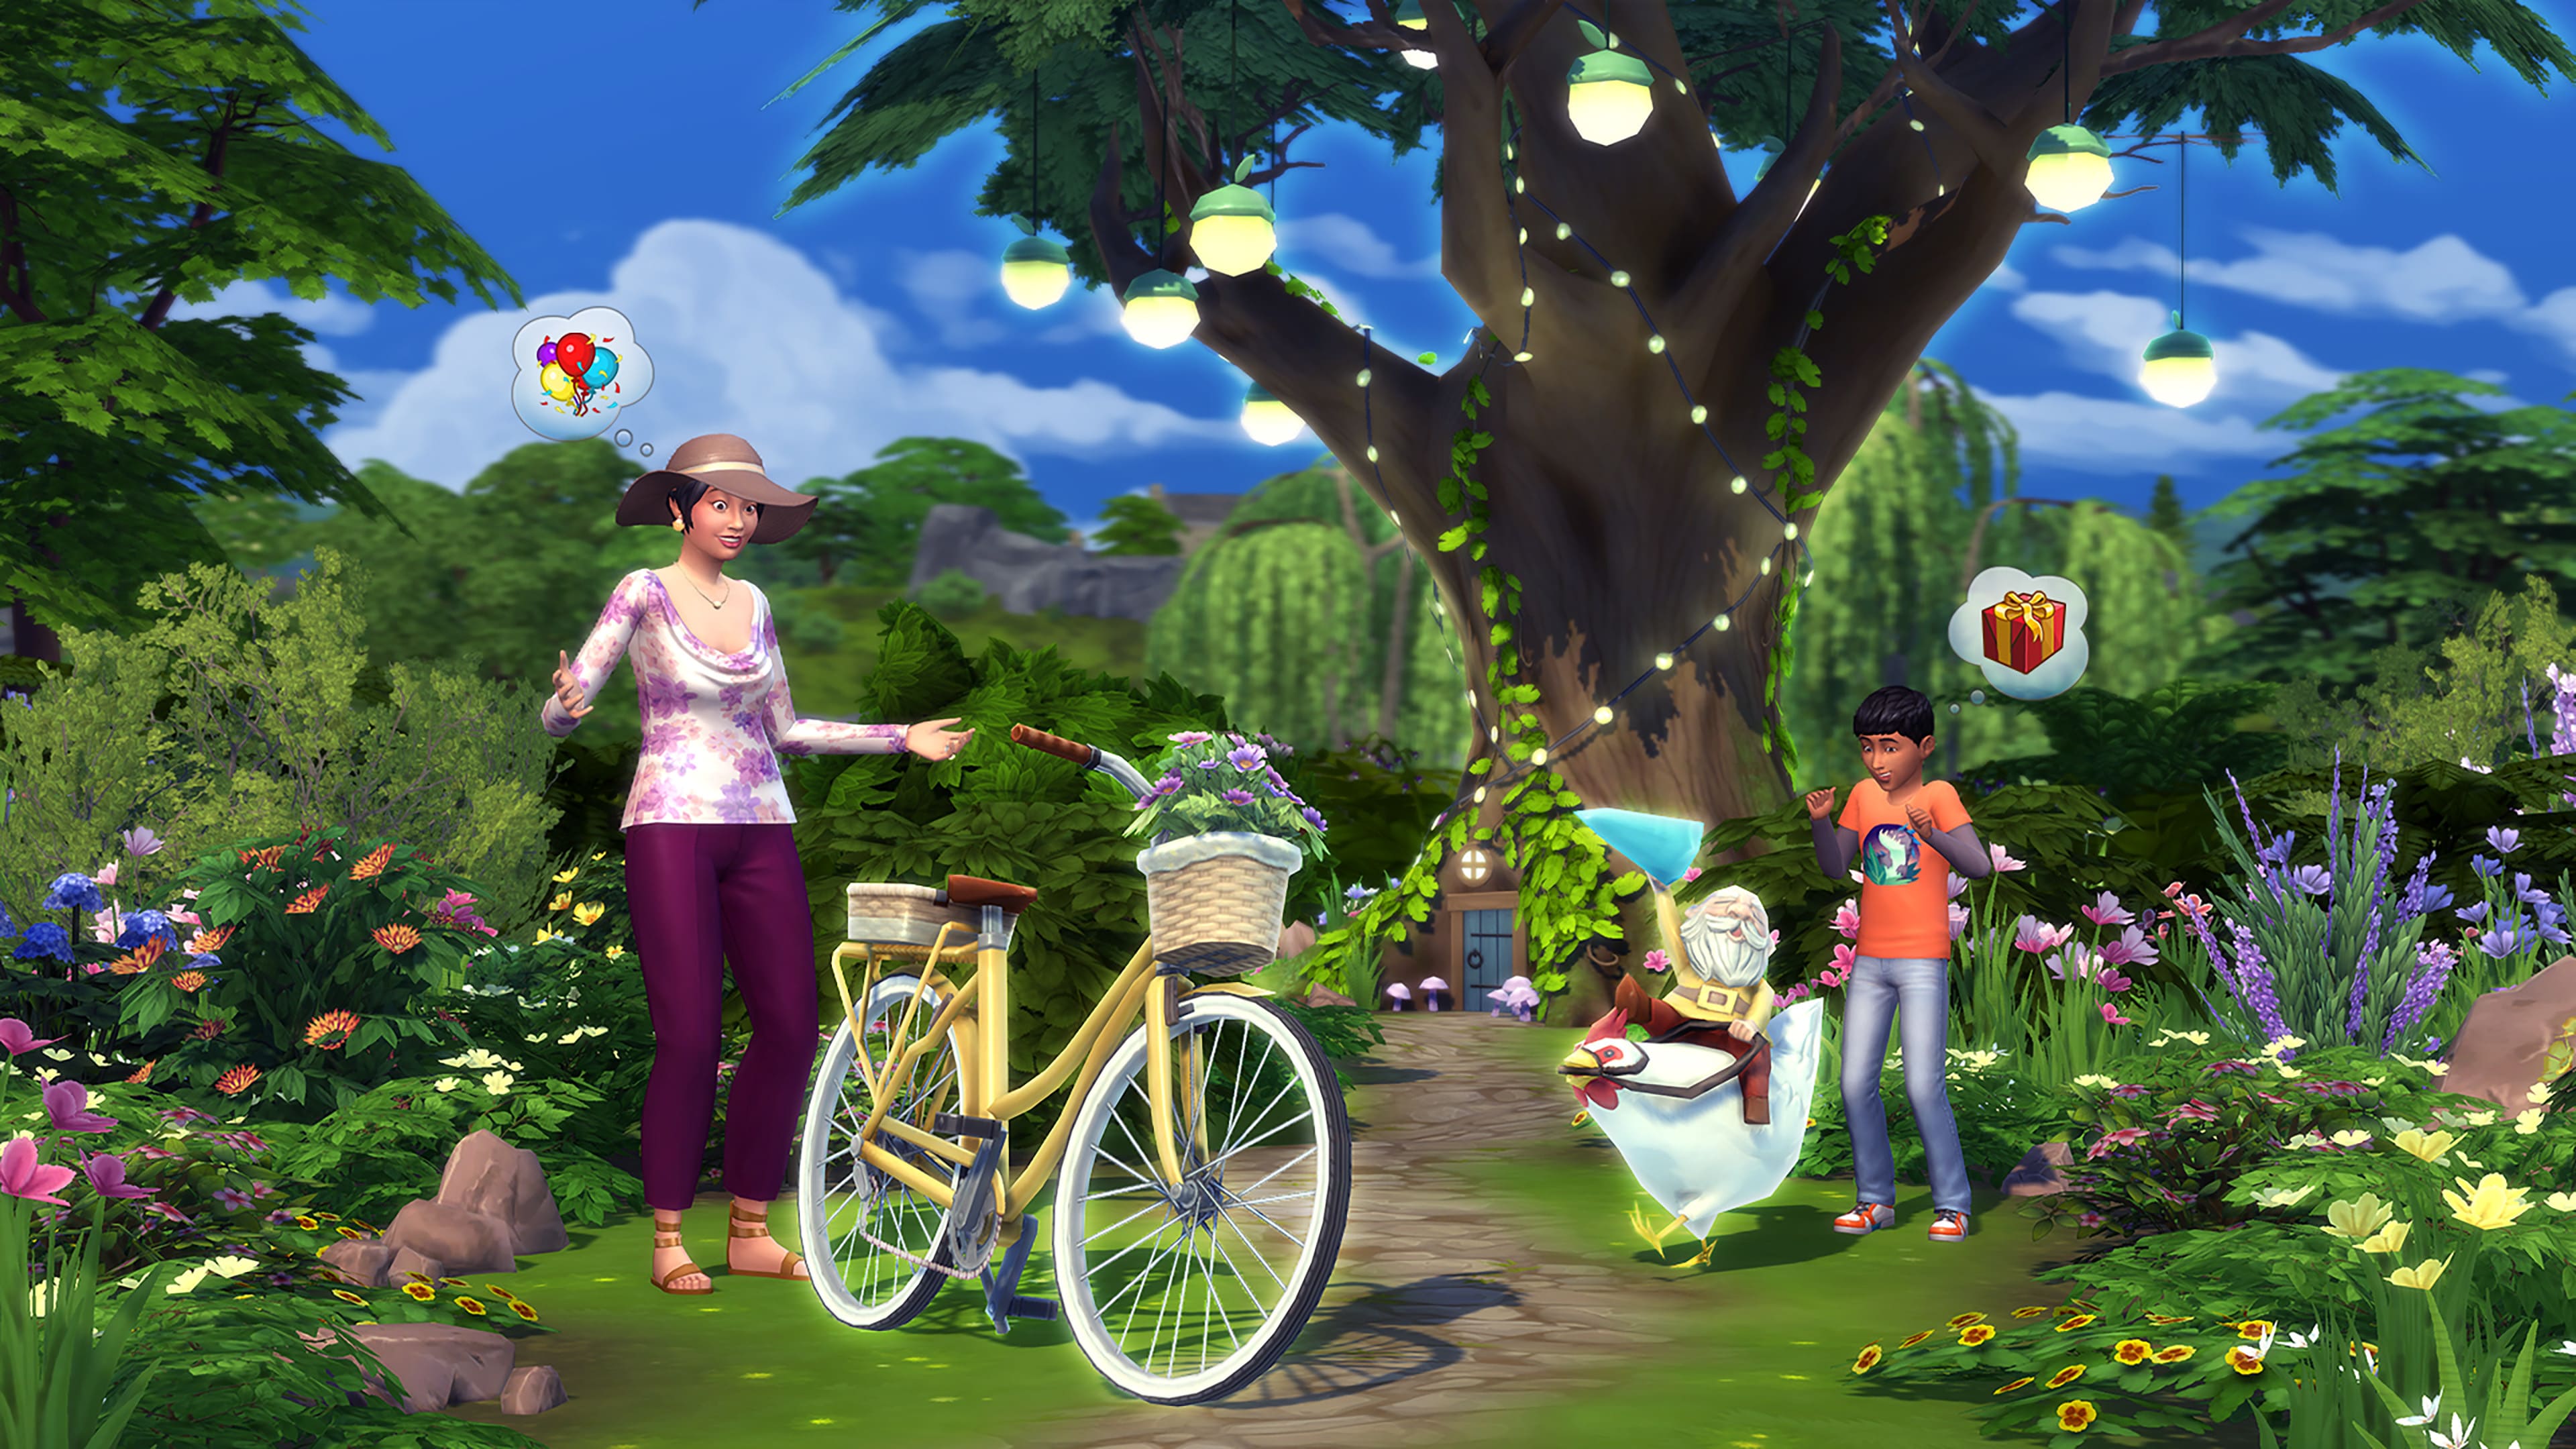 The Sims 4 - Island Living - Origin PC [Online Game Code]